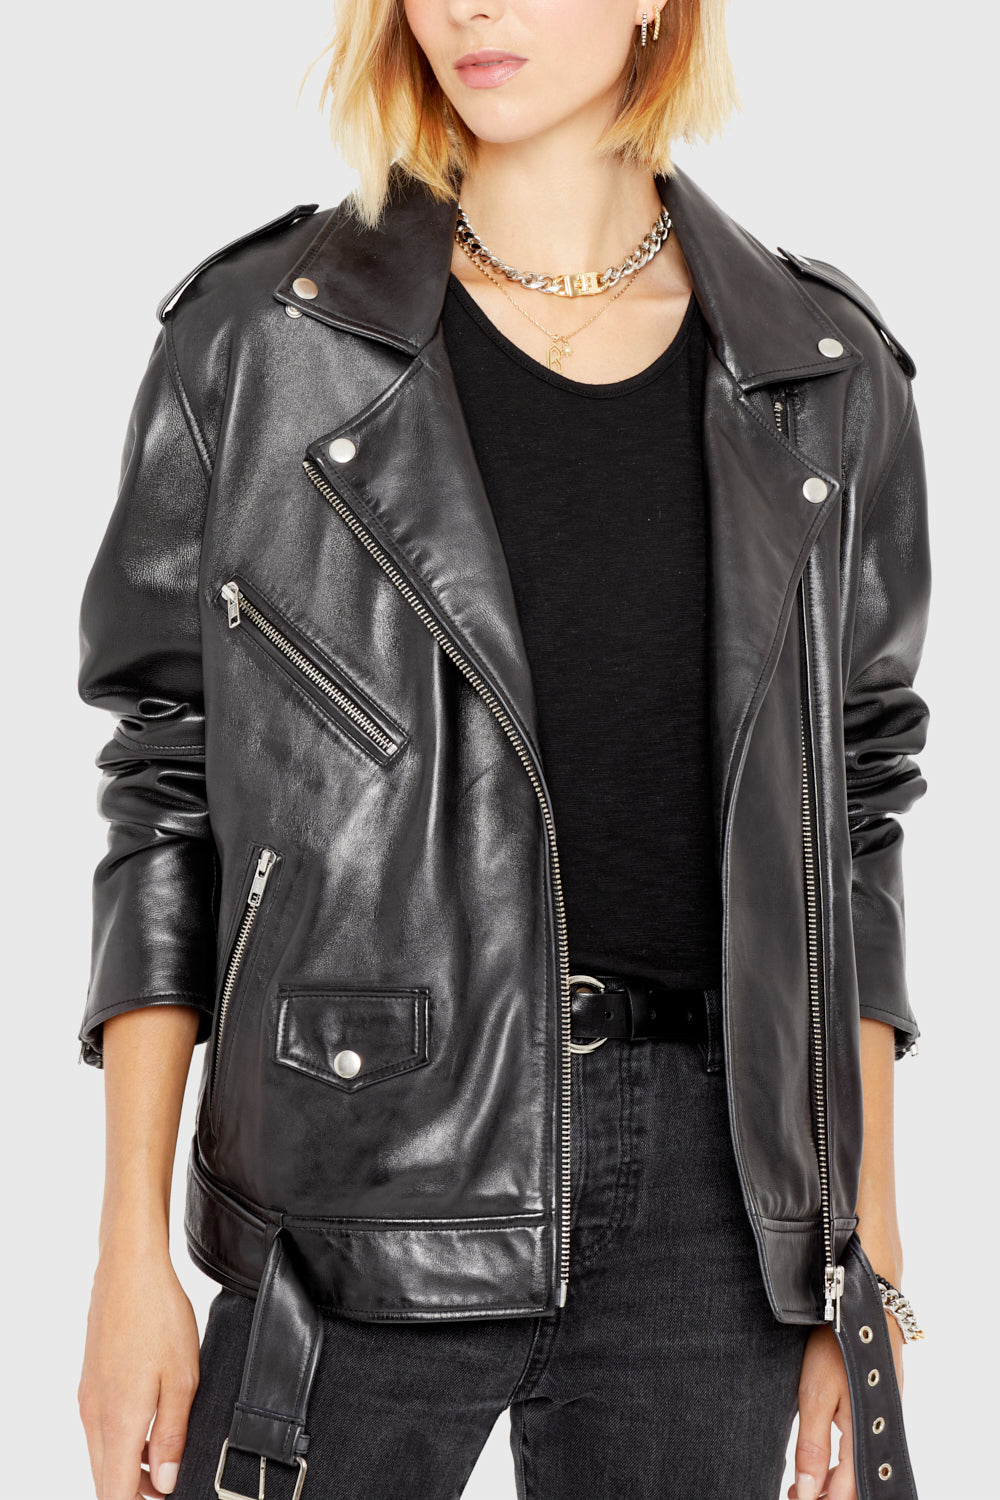 discount 78% Gray M WOMEN FASHION Jackets Biker jacket Basic NoName biker jacket 